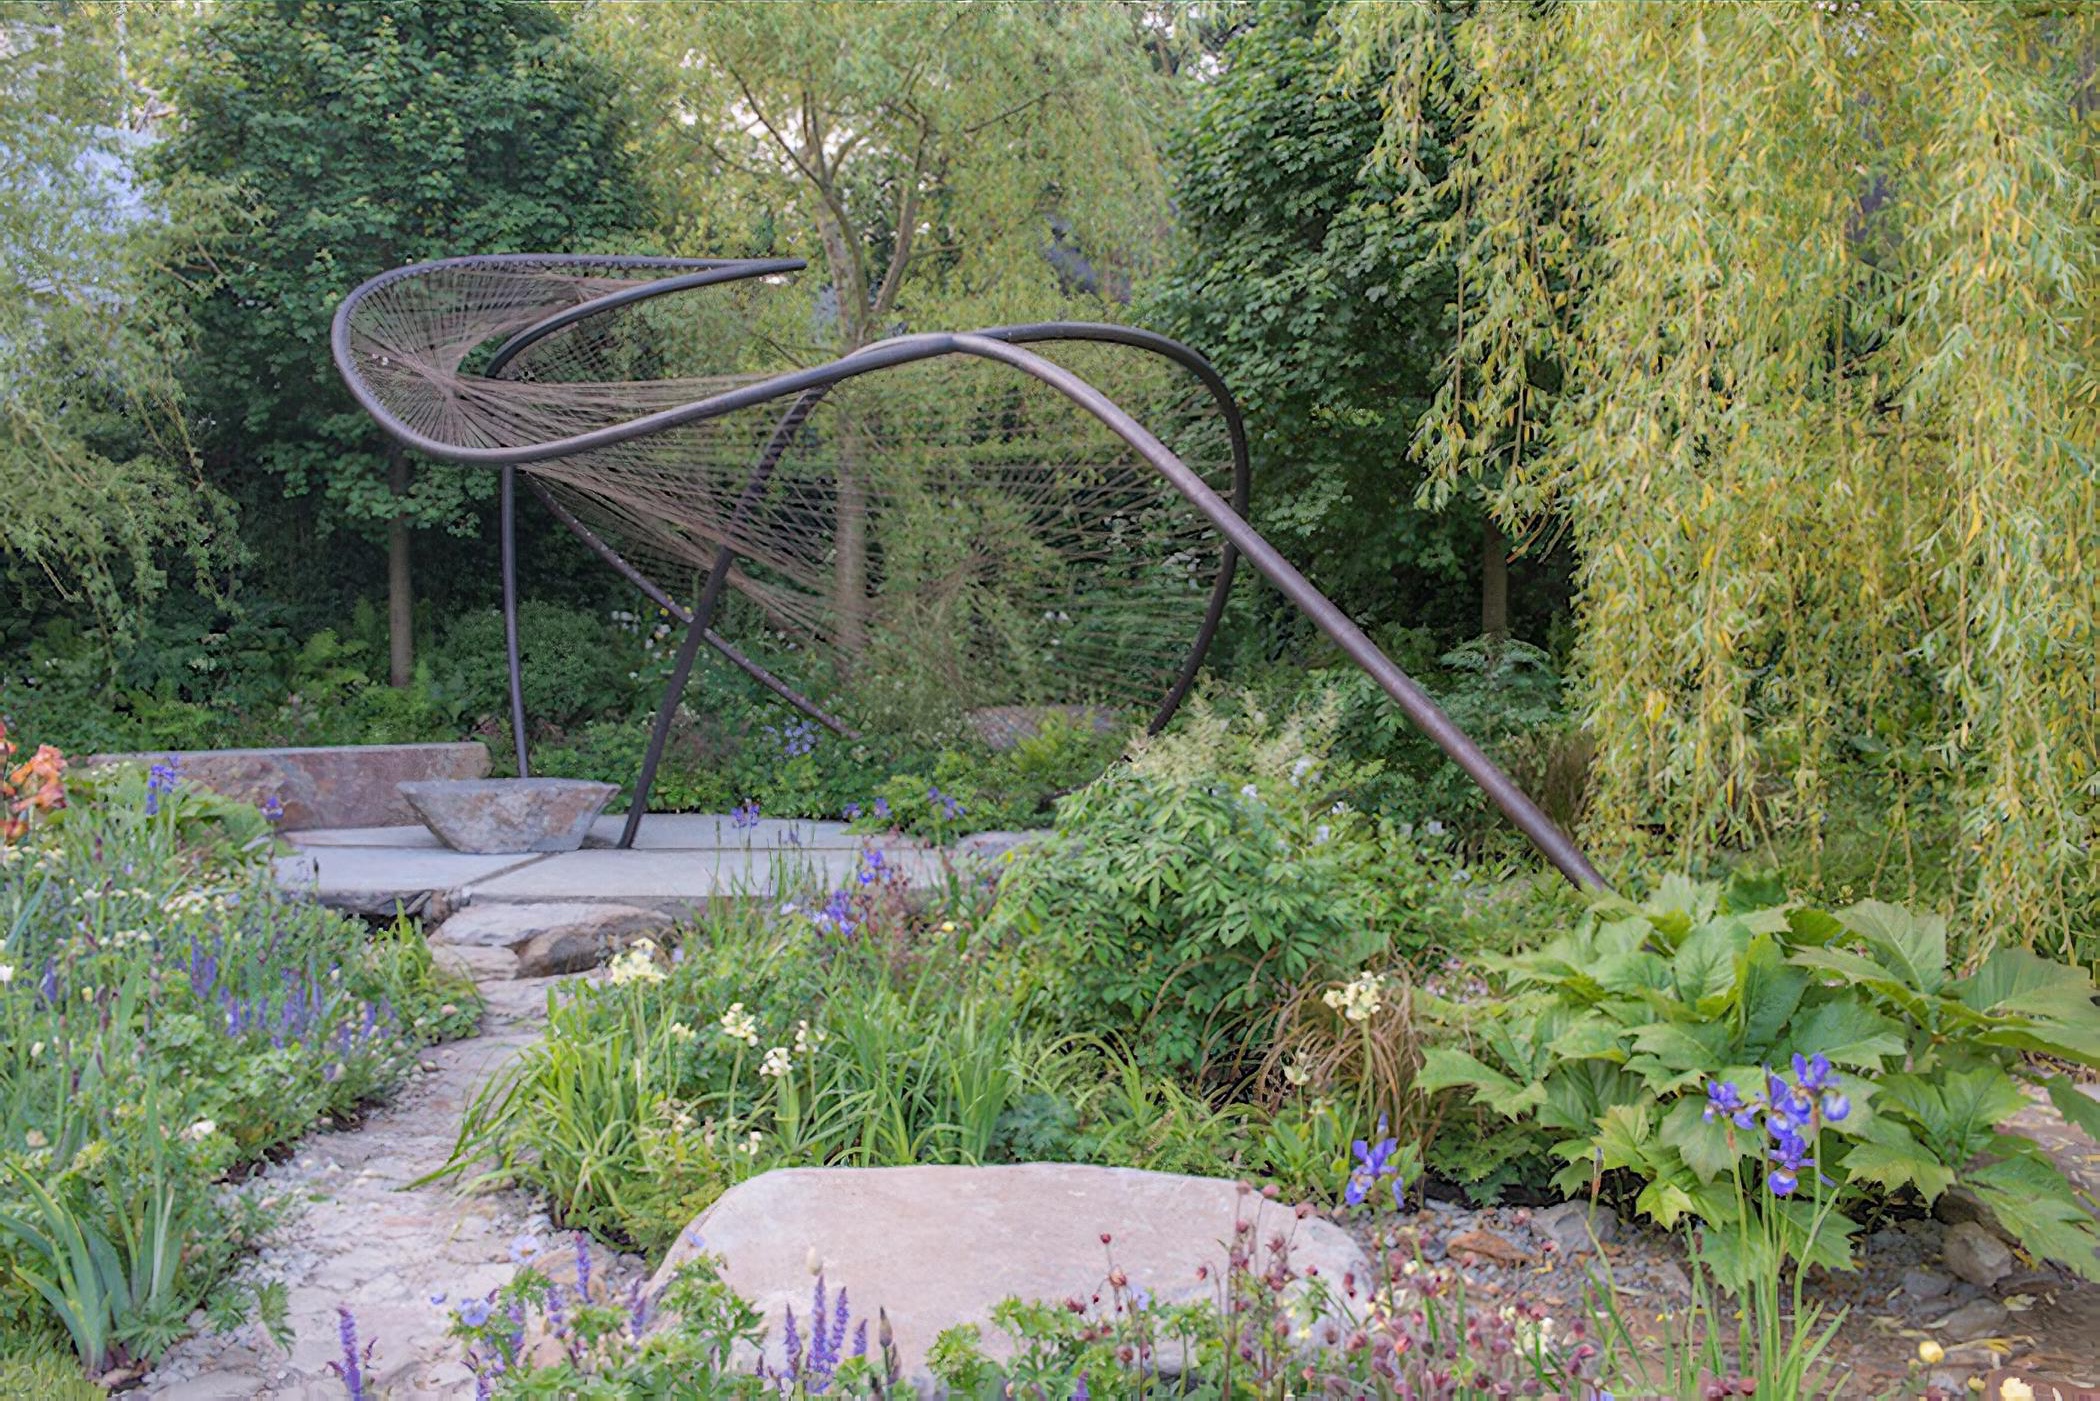 The Wedgwood Garden Chelsea Flower Show 2018 by London and Sussex based garden designer Jo Thompson